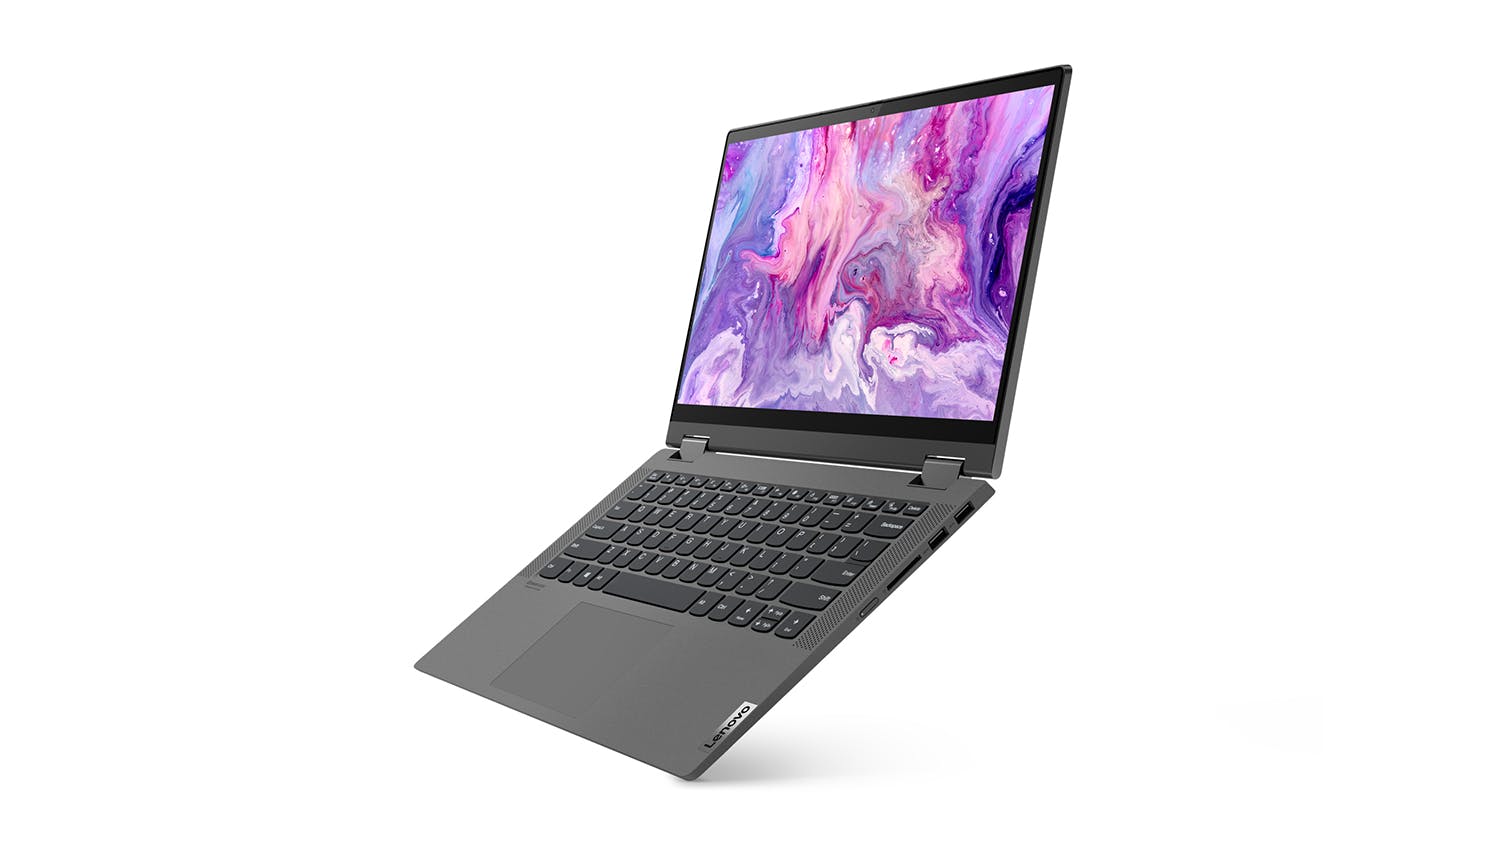 Lenovo IdeaPad Flex 5i 14" 2-in-1 Laptop - Intel Core i5 8GB-RAM 256GB-SSD (82HS00YJNZ) - Graphite Grey